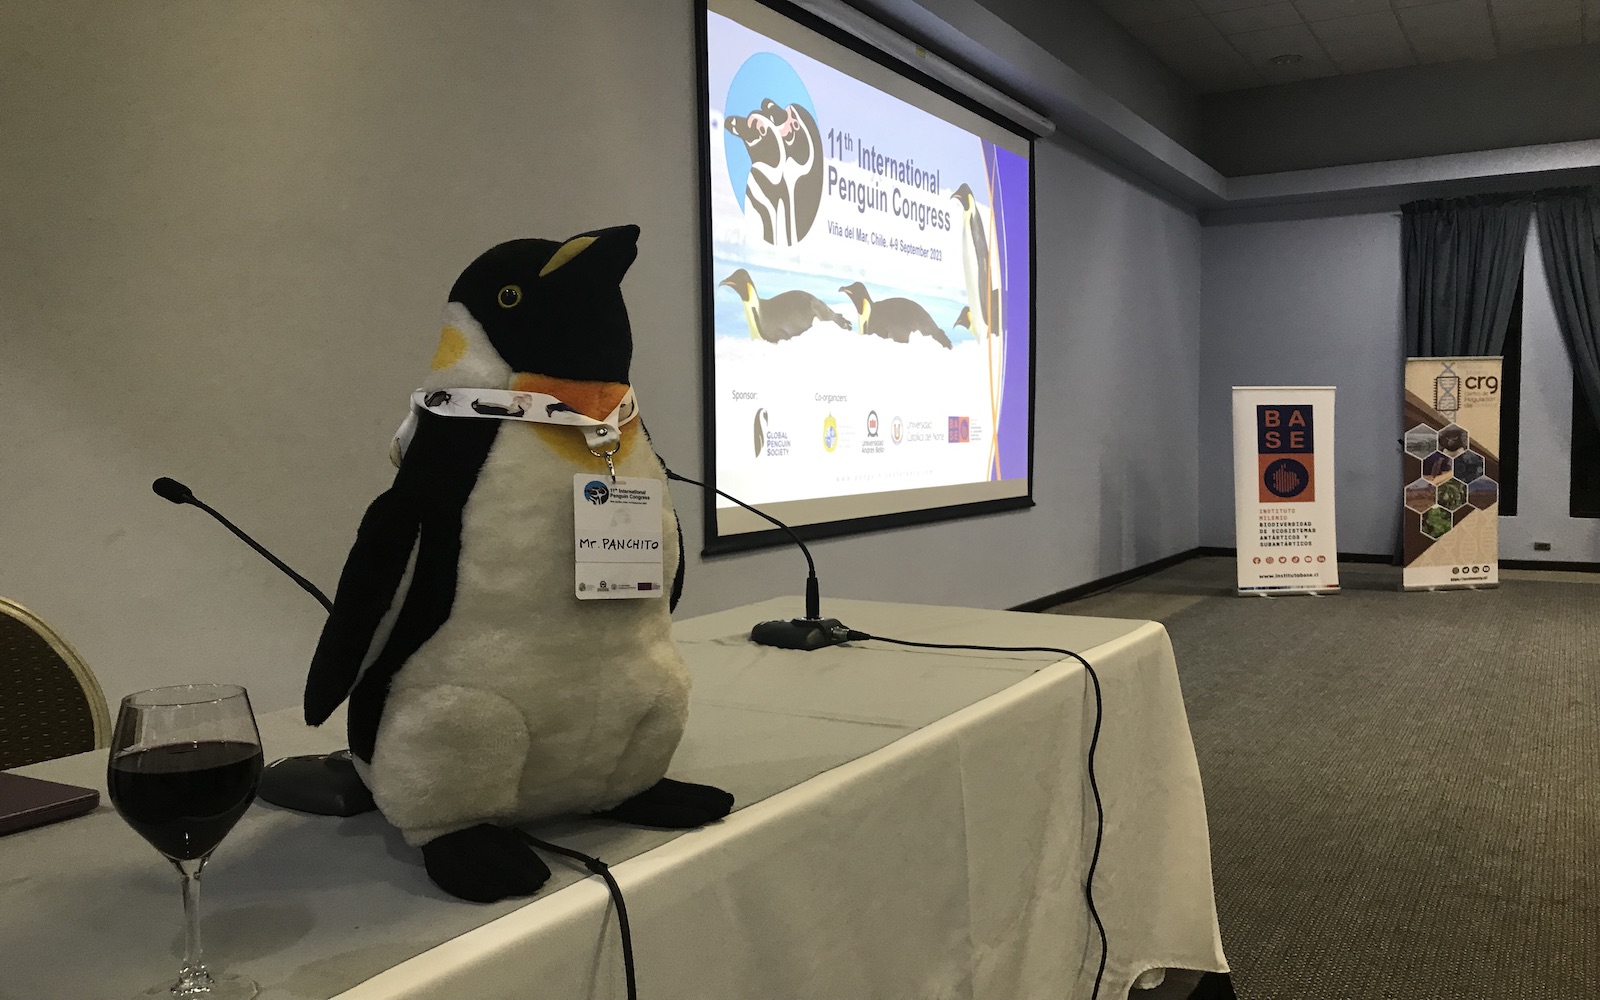 11th International Penguin Congress